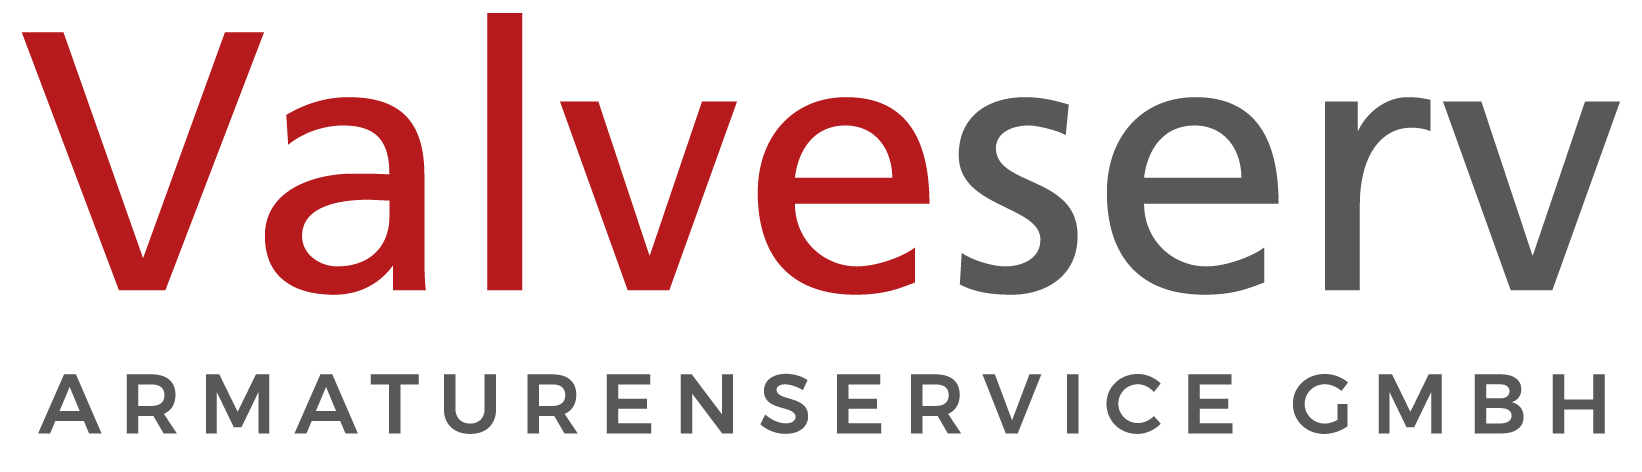 Valveserv Armaturenservice GmbH